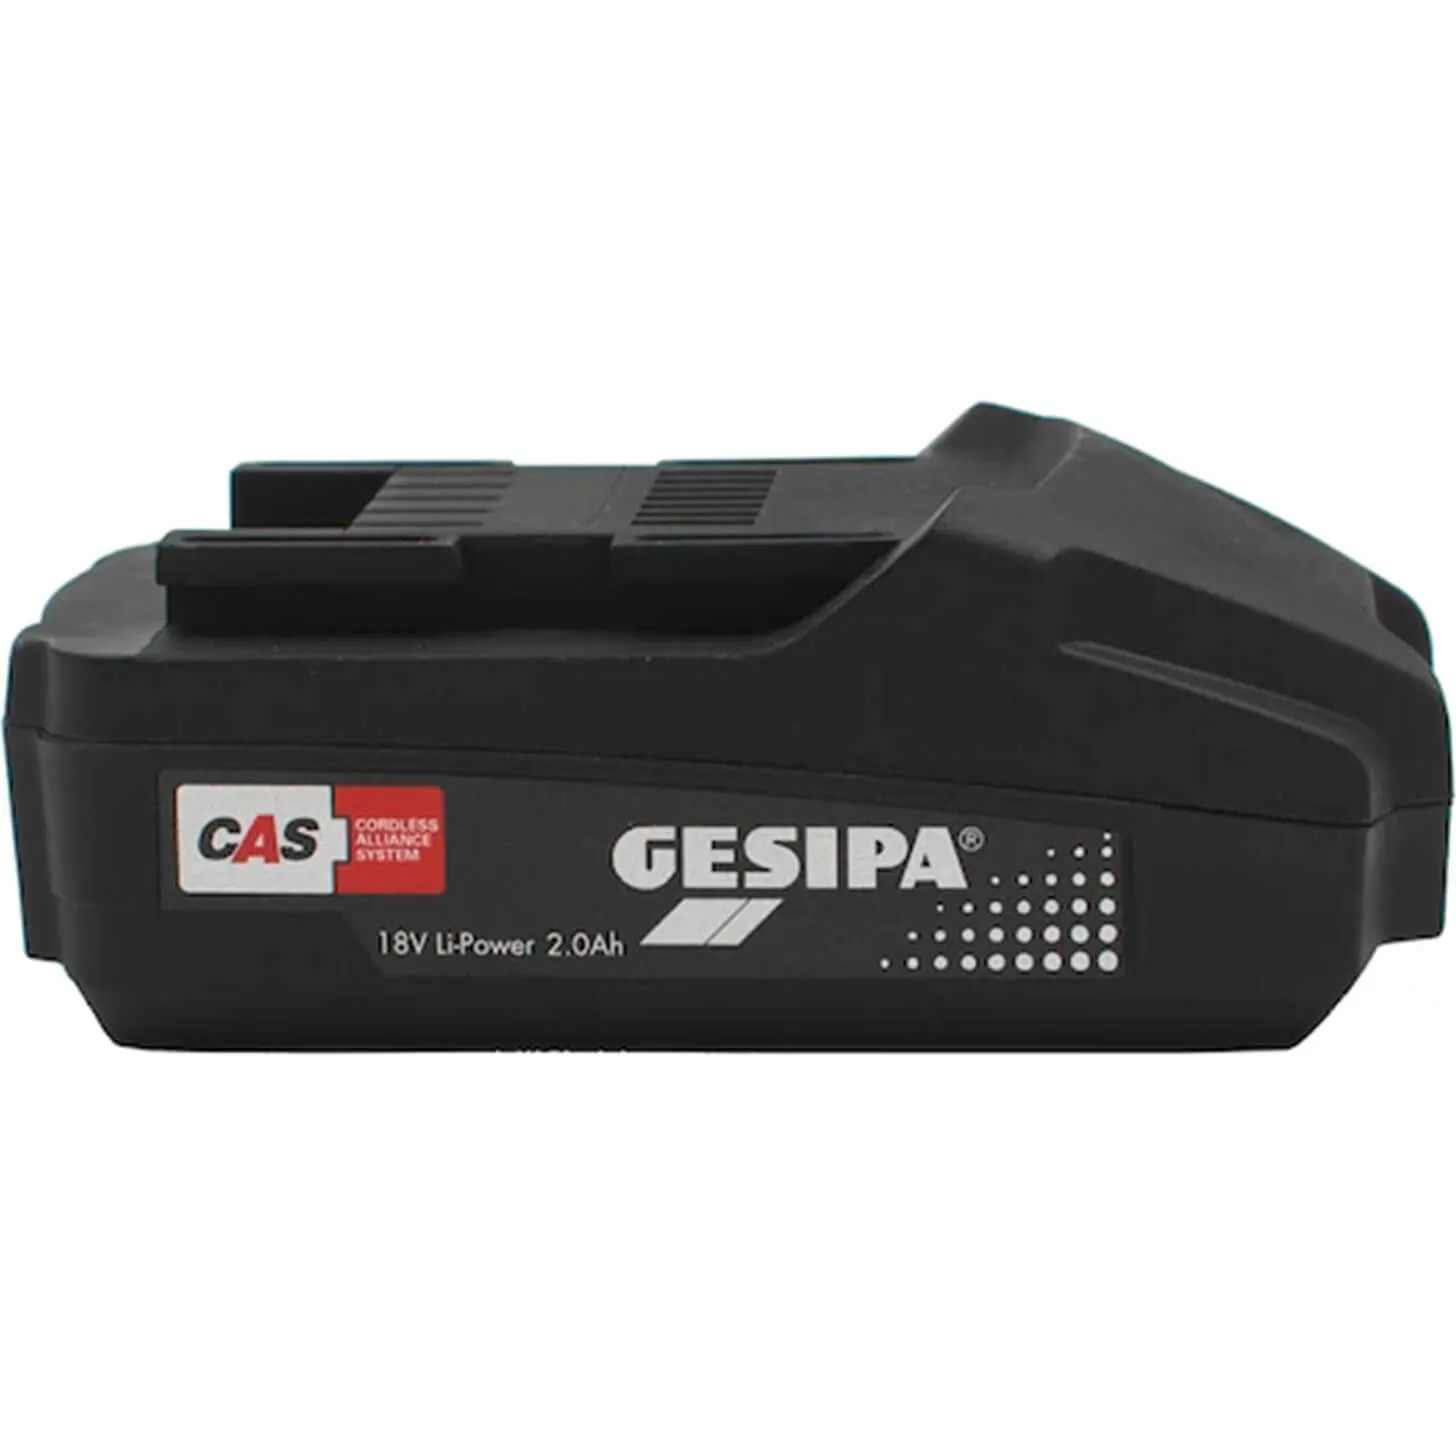 Gesipa Cordless Li-ion Battery 2ah - 2ah